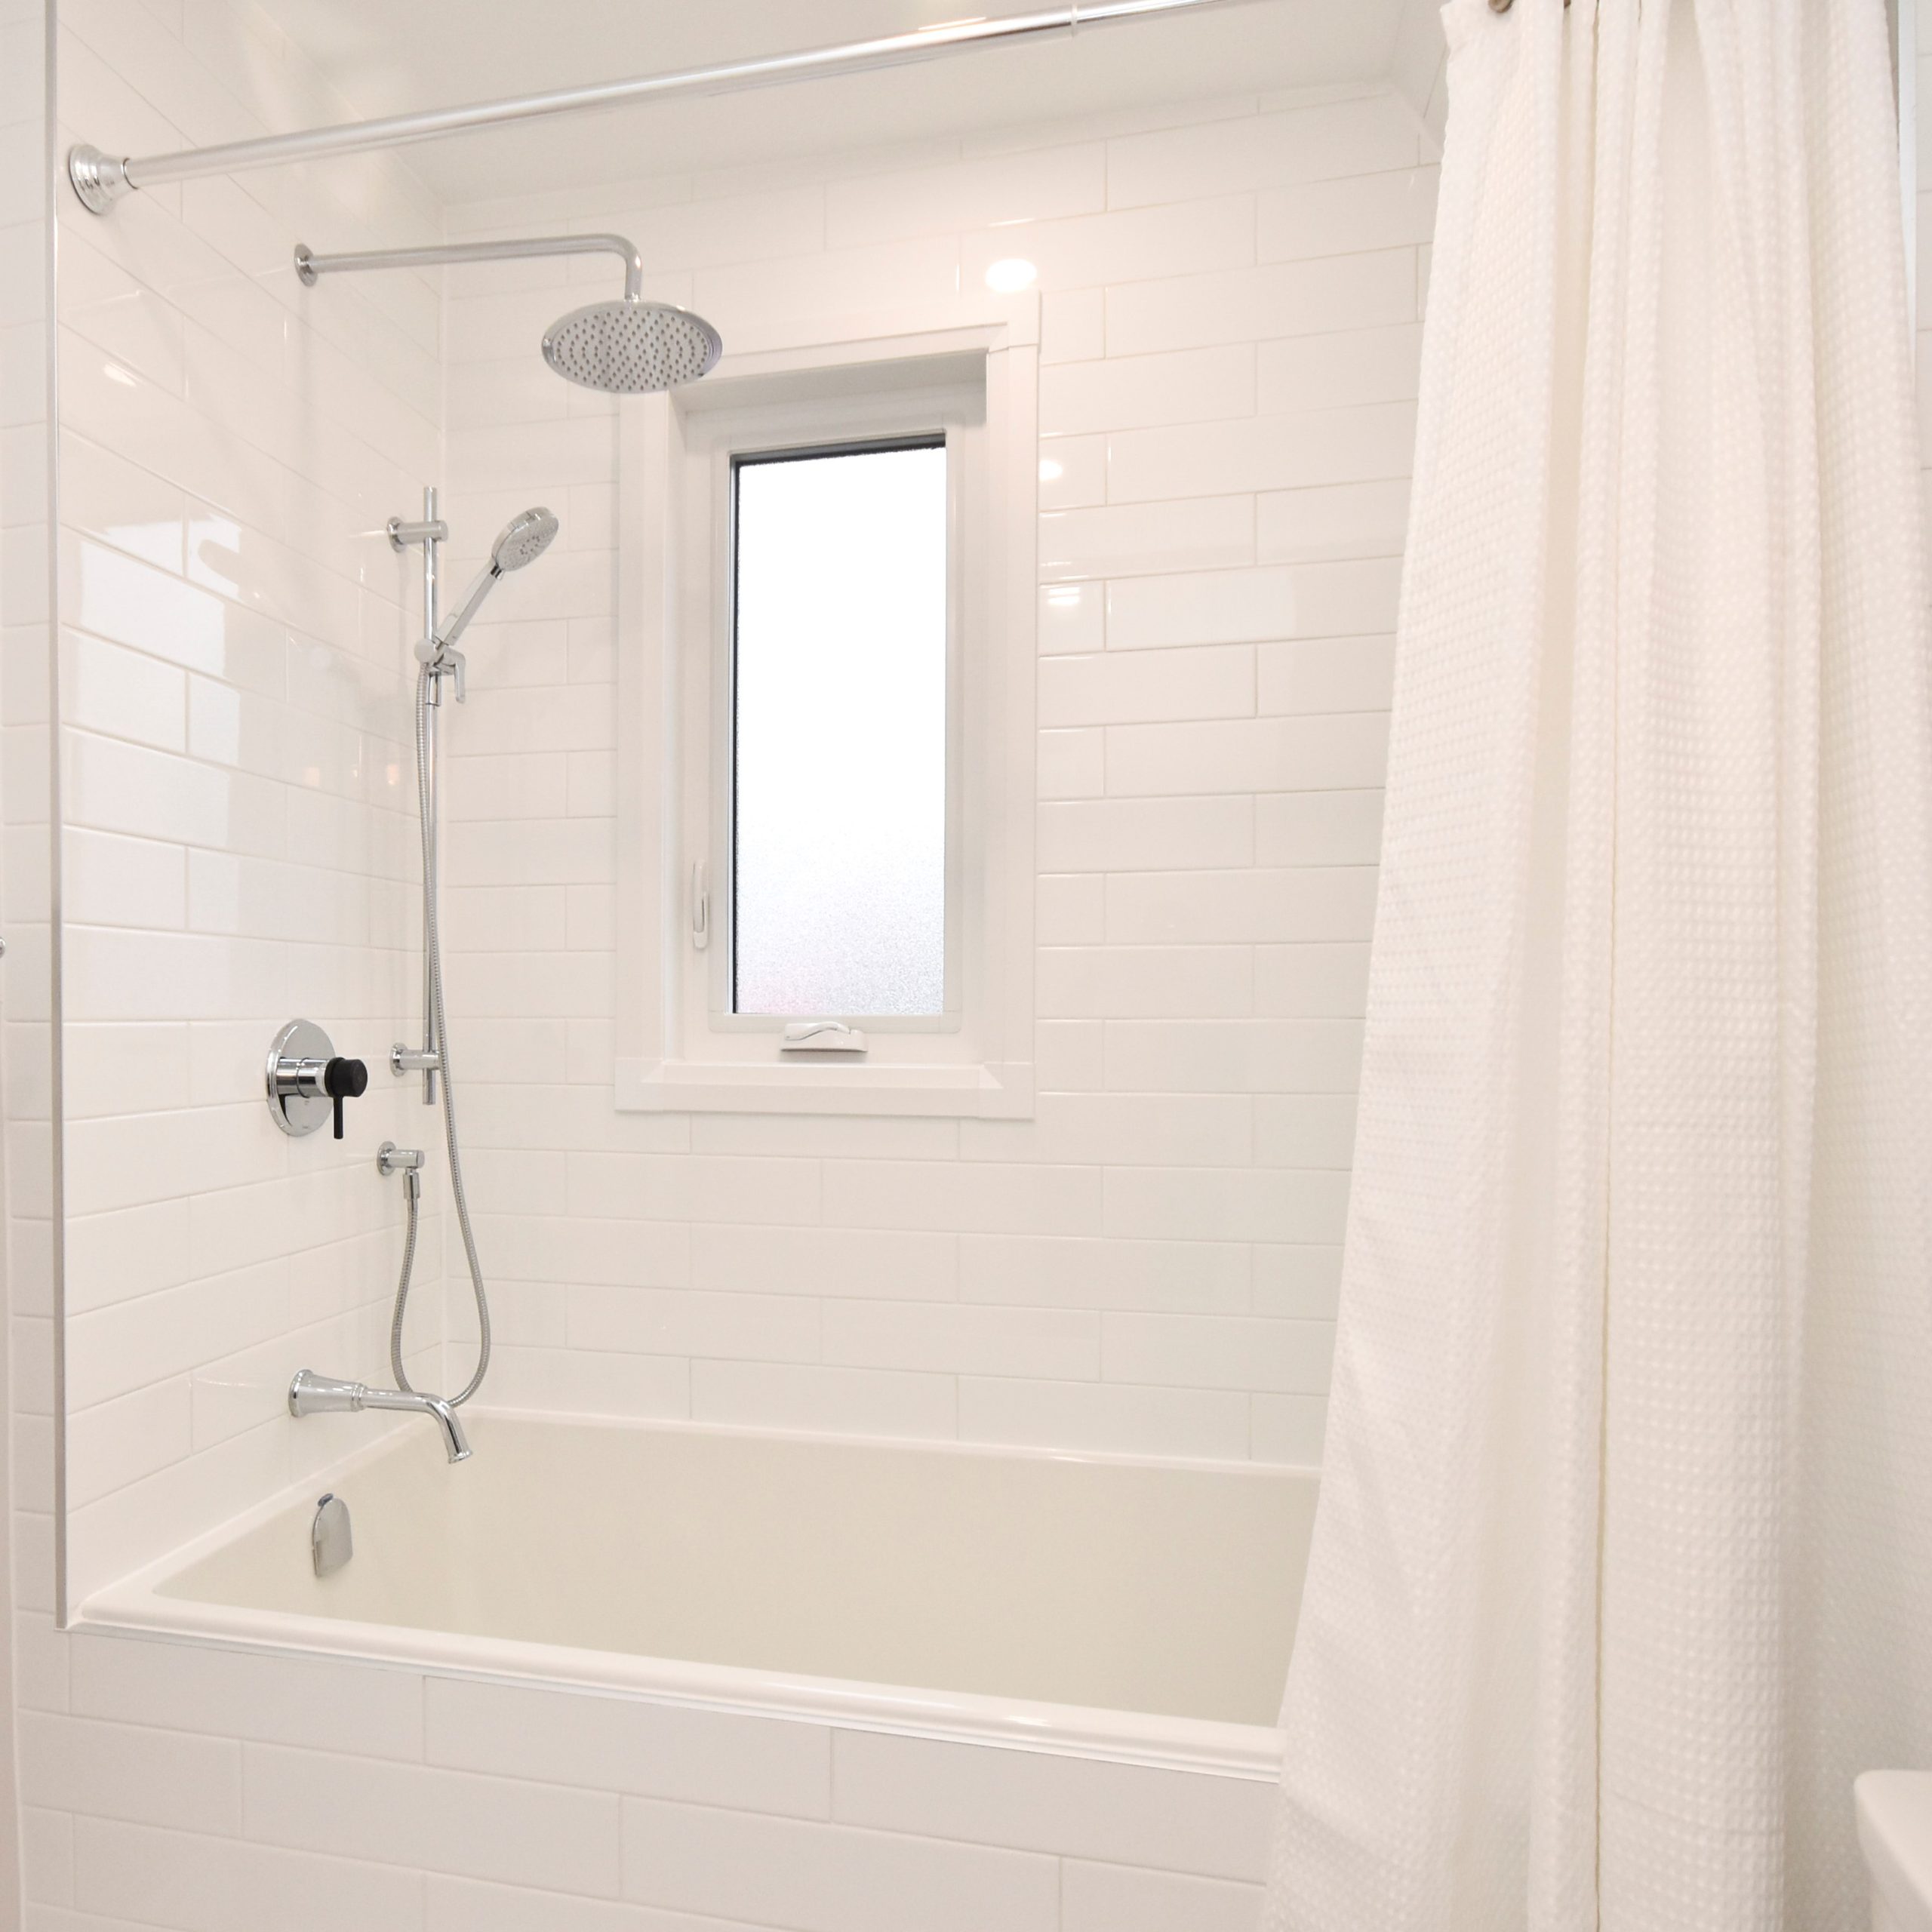 Bathroom Design - Shower Faucet